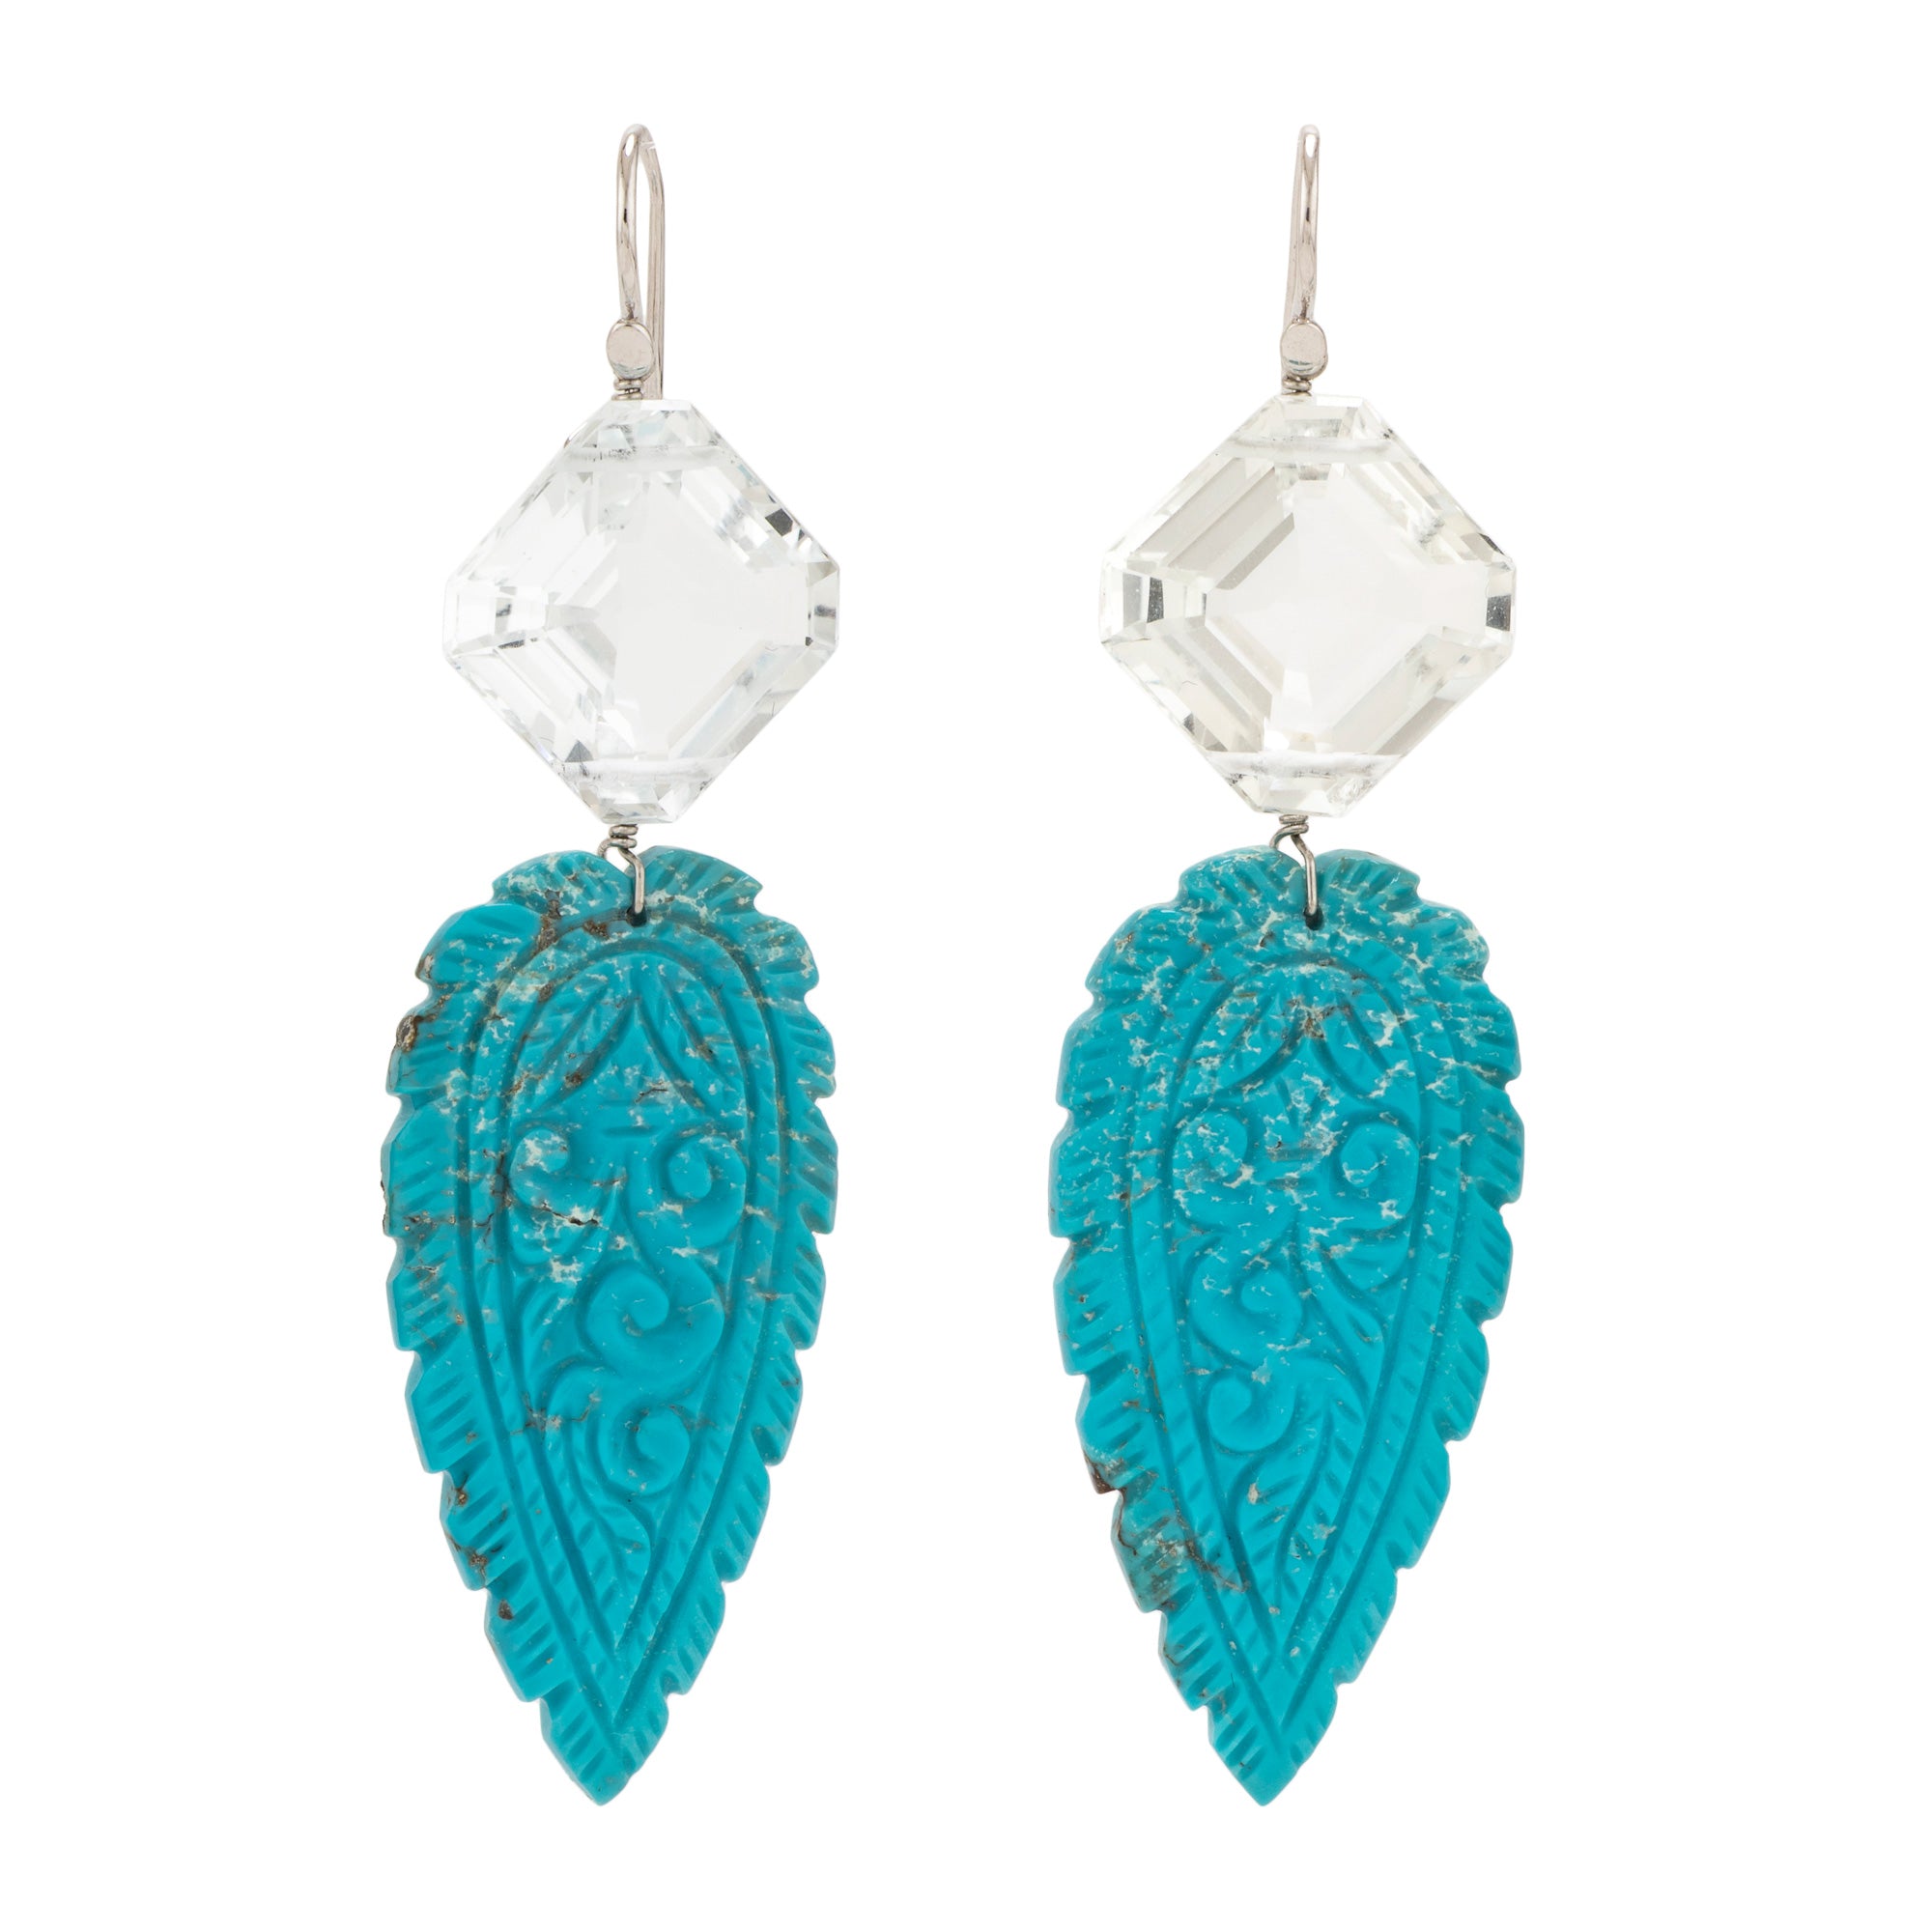 Carved ii turquoise earrings